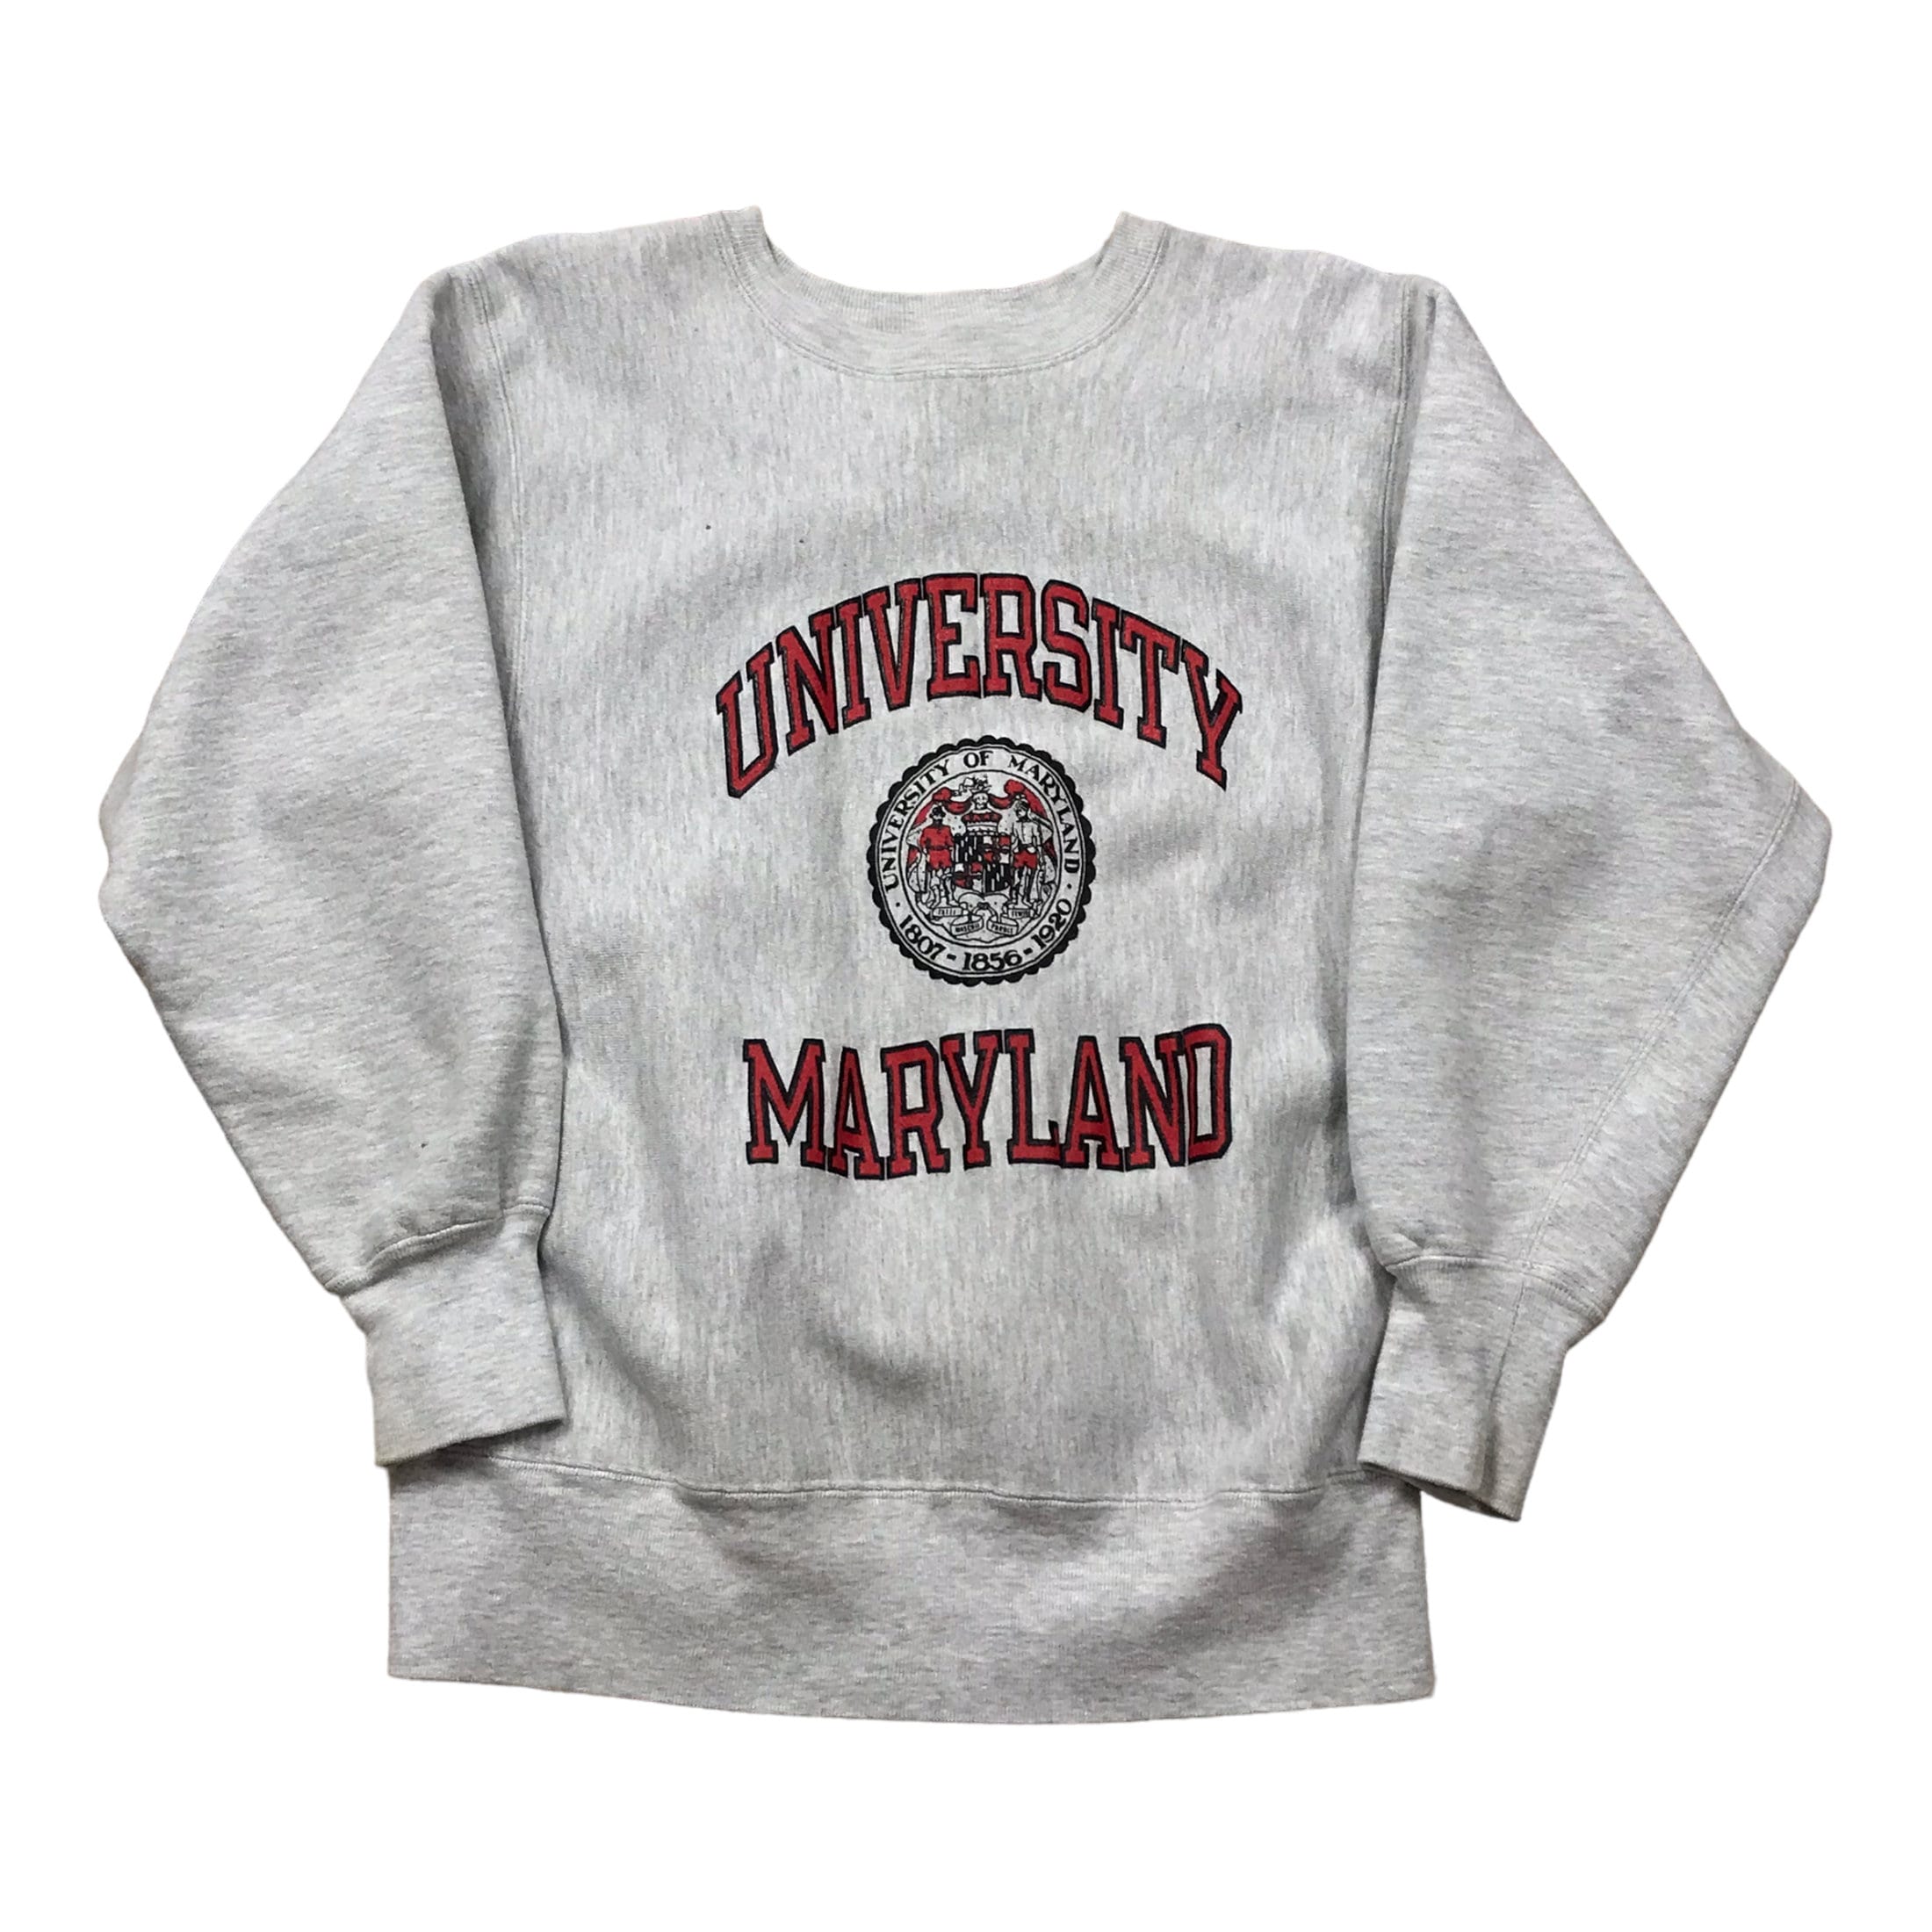 1990s Champion Reverse Weave University of Maryland Sweatshirt